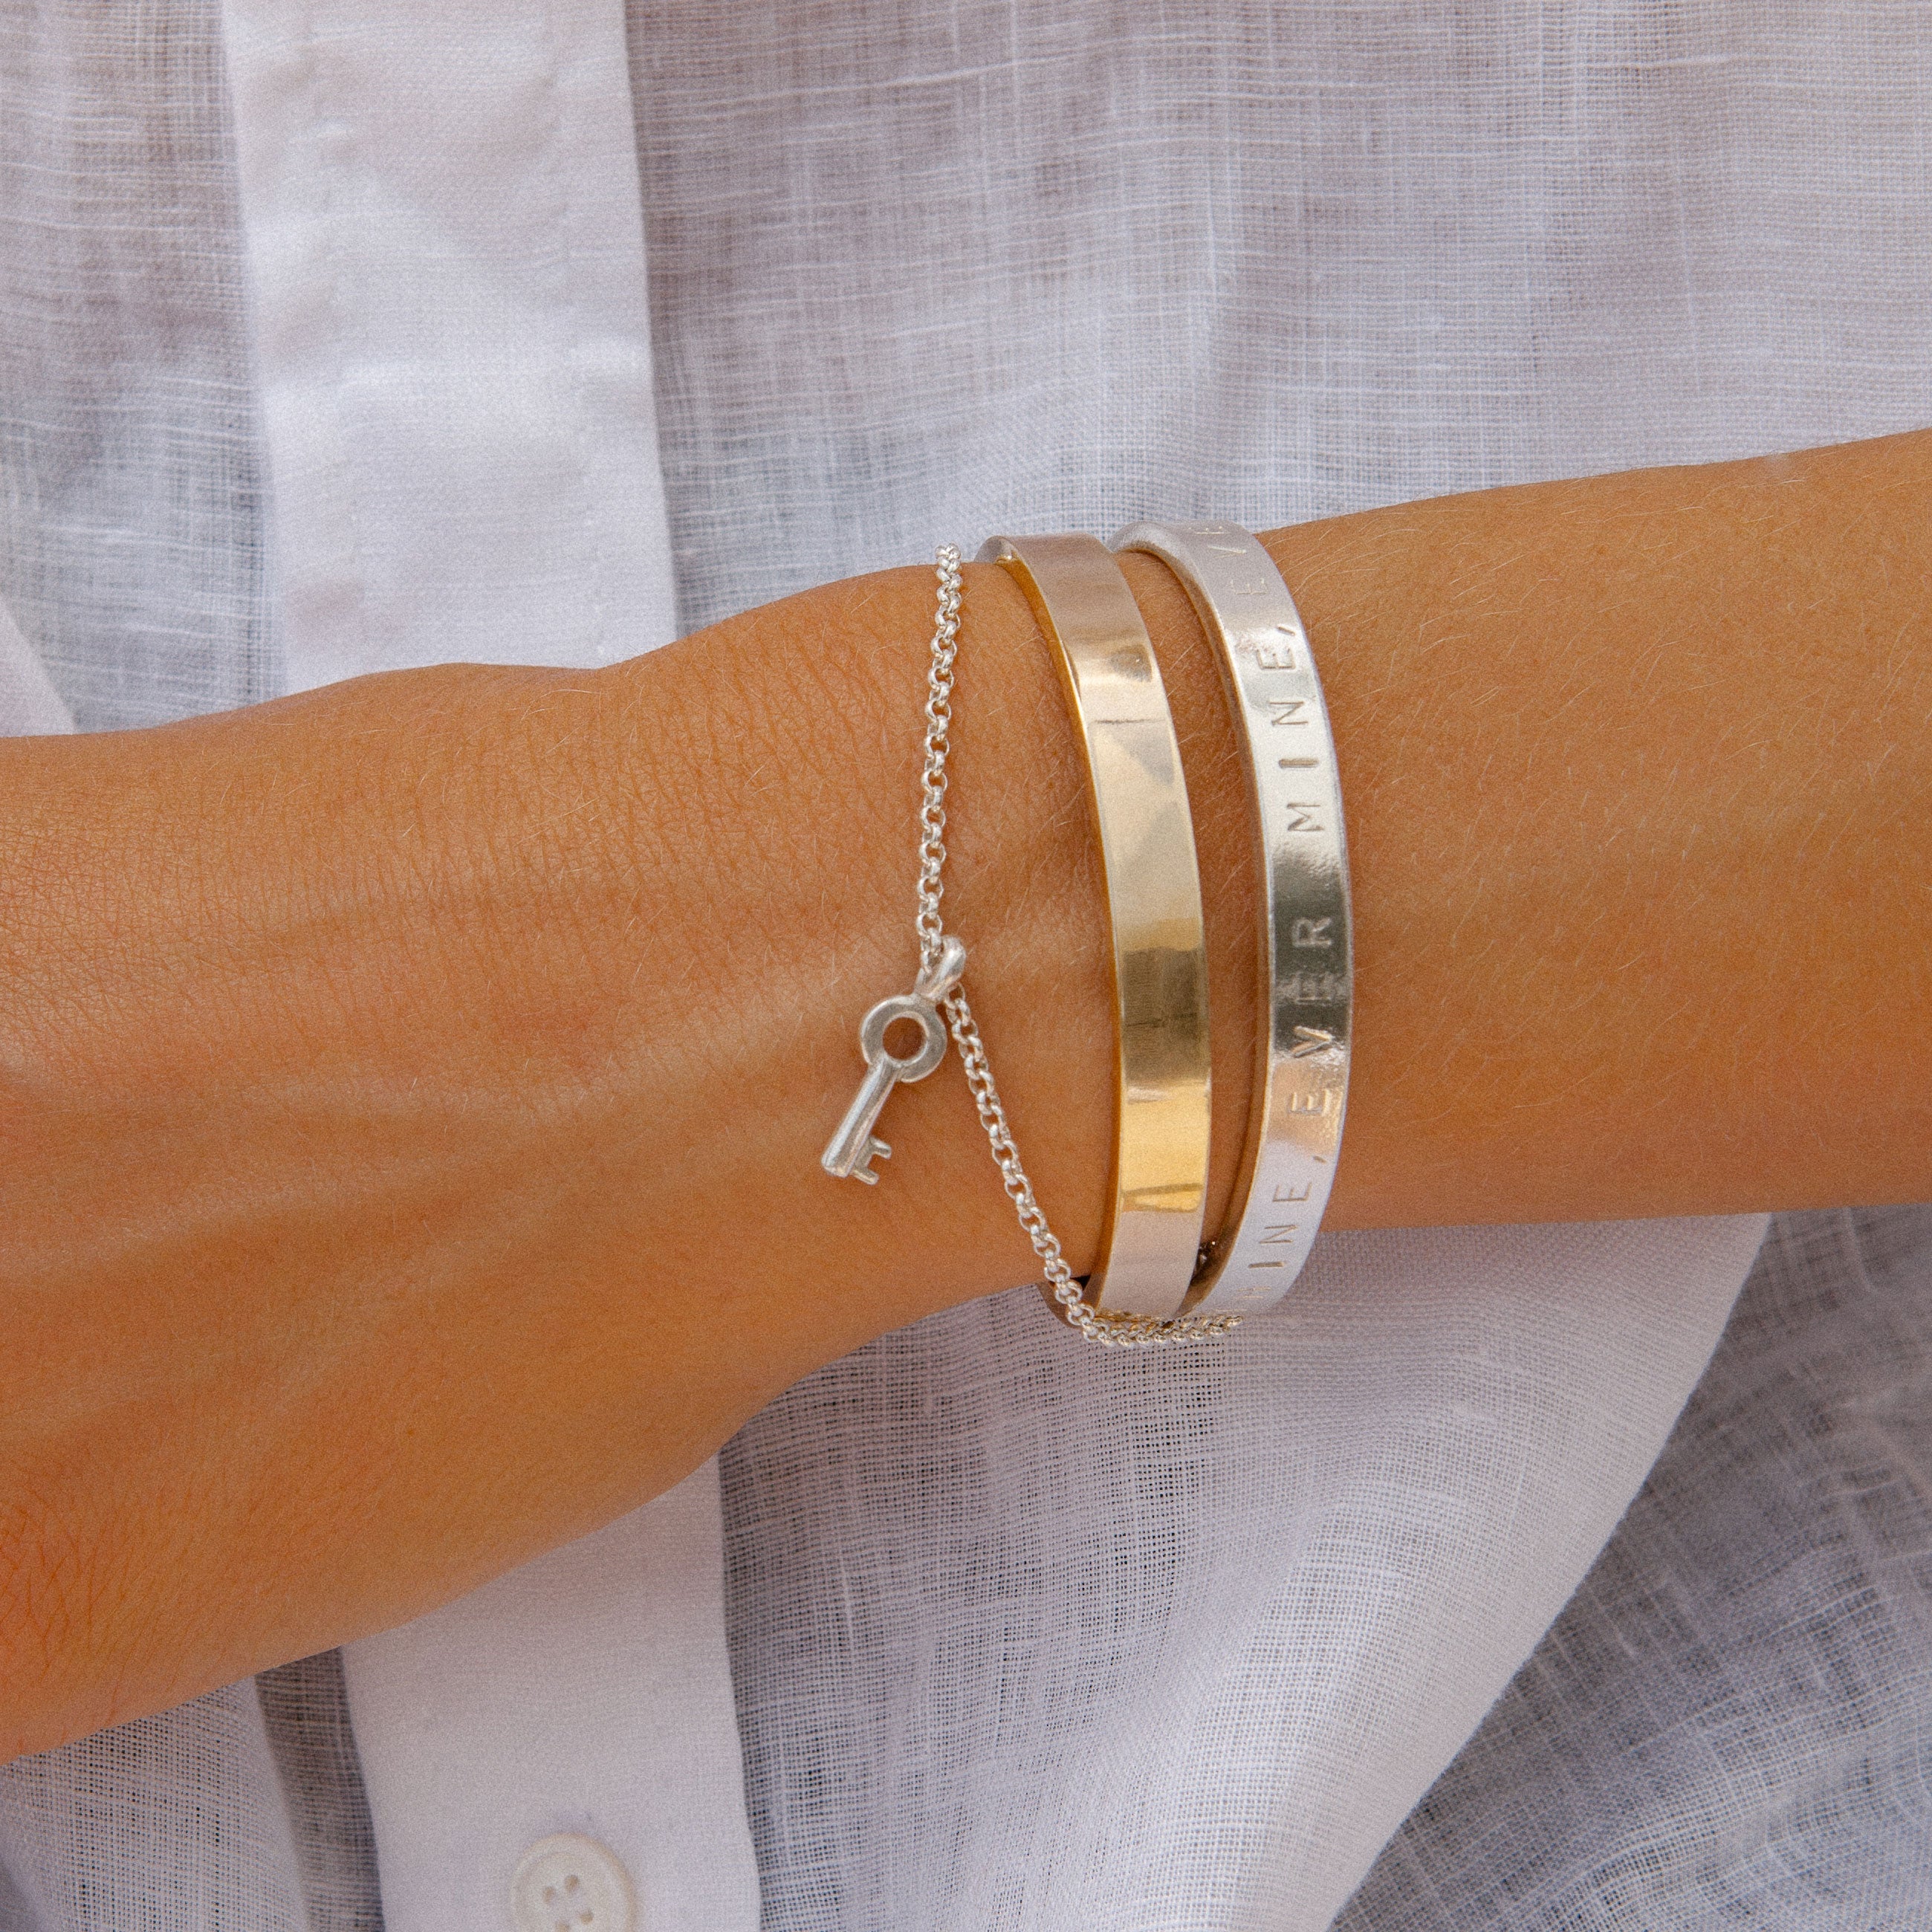 Dreamer bracelet to personalize